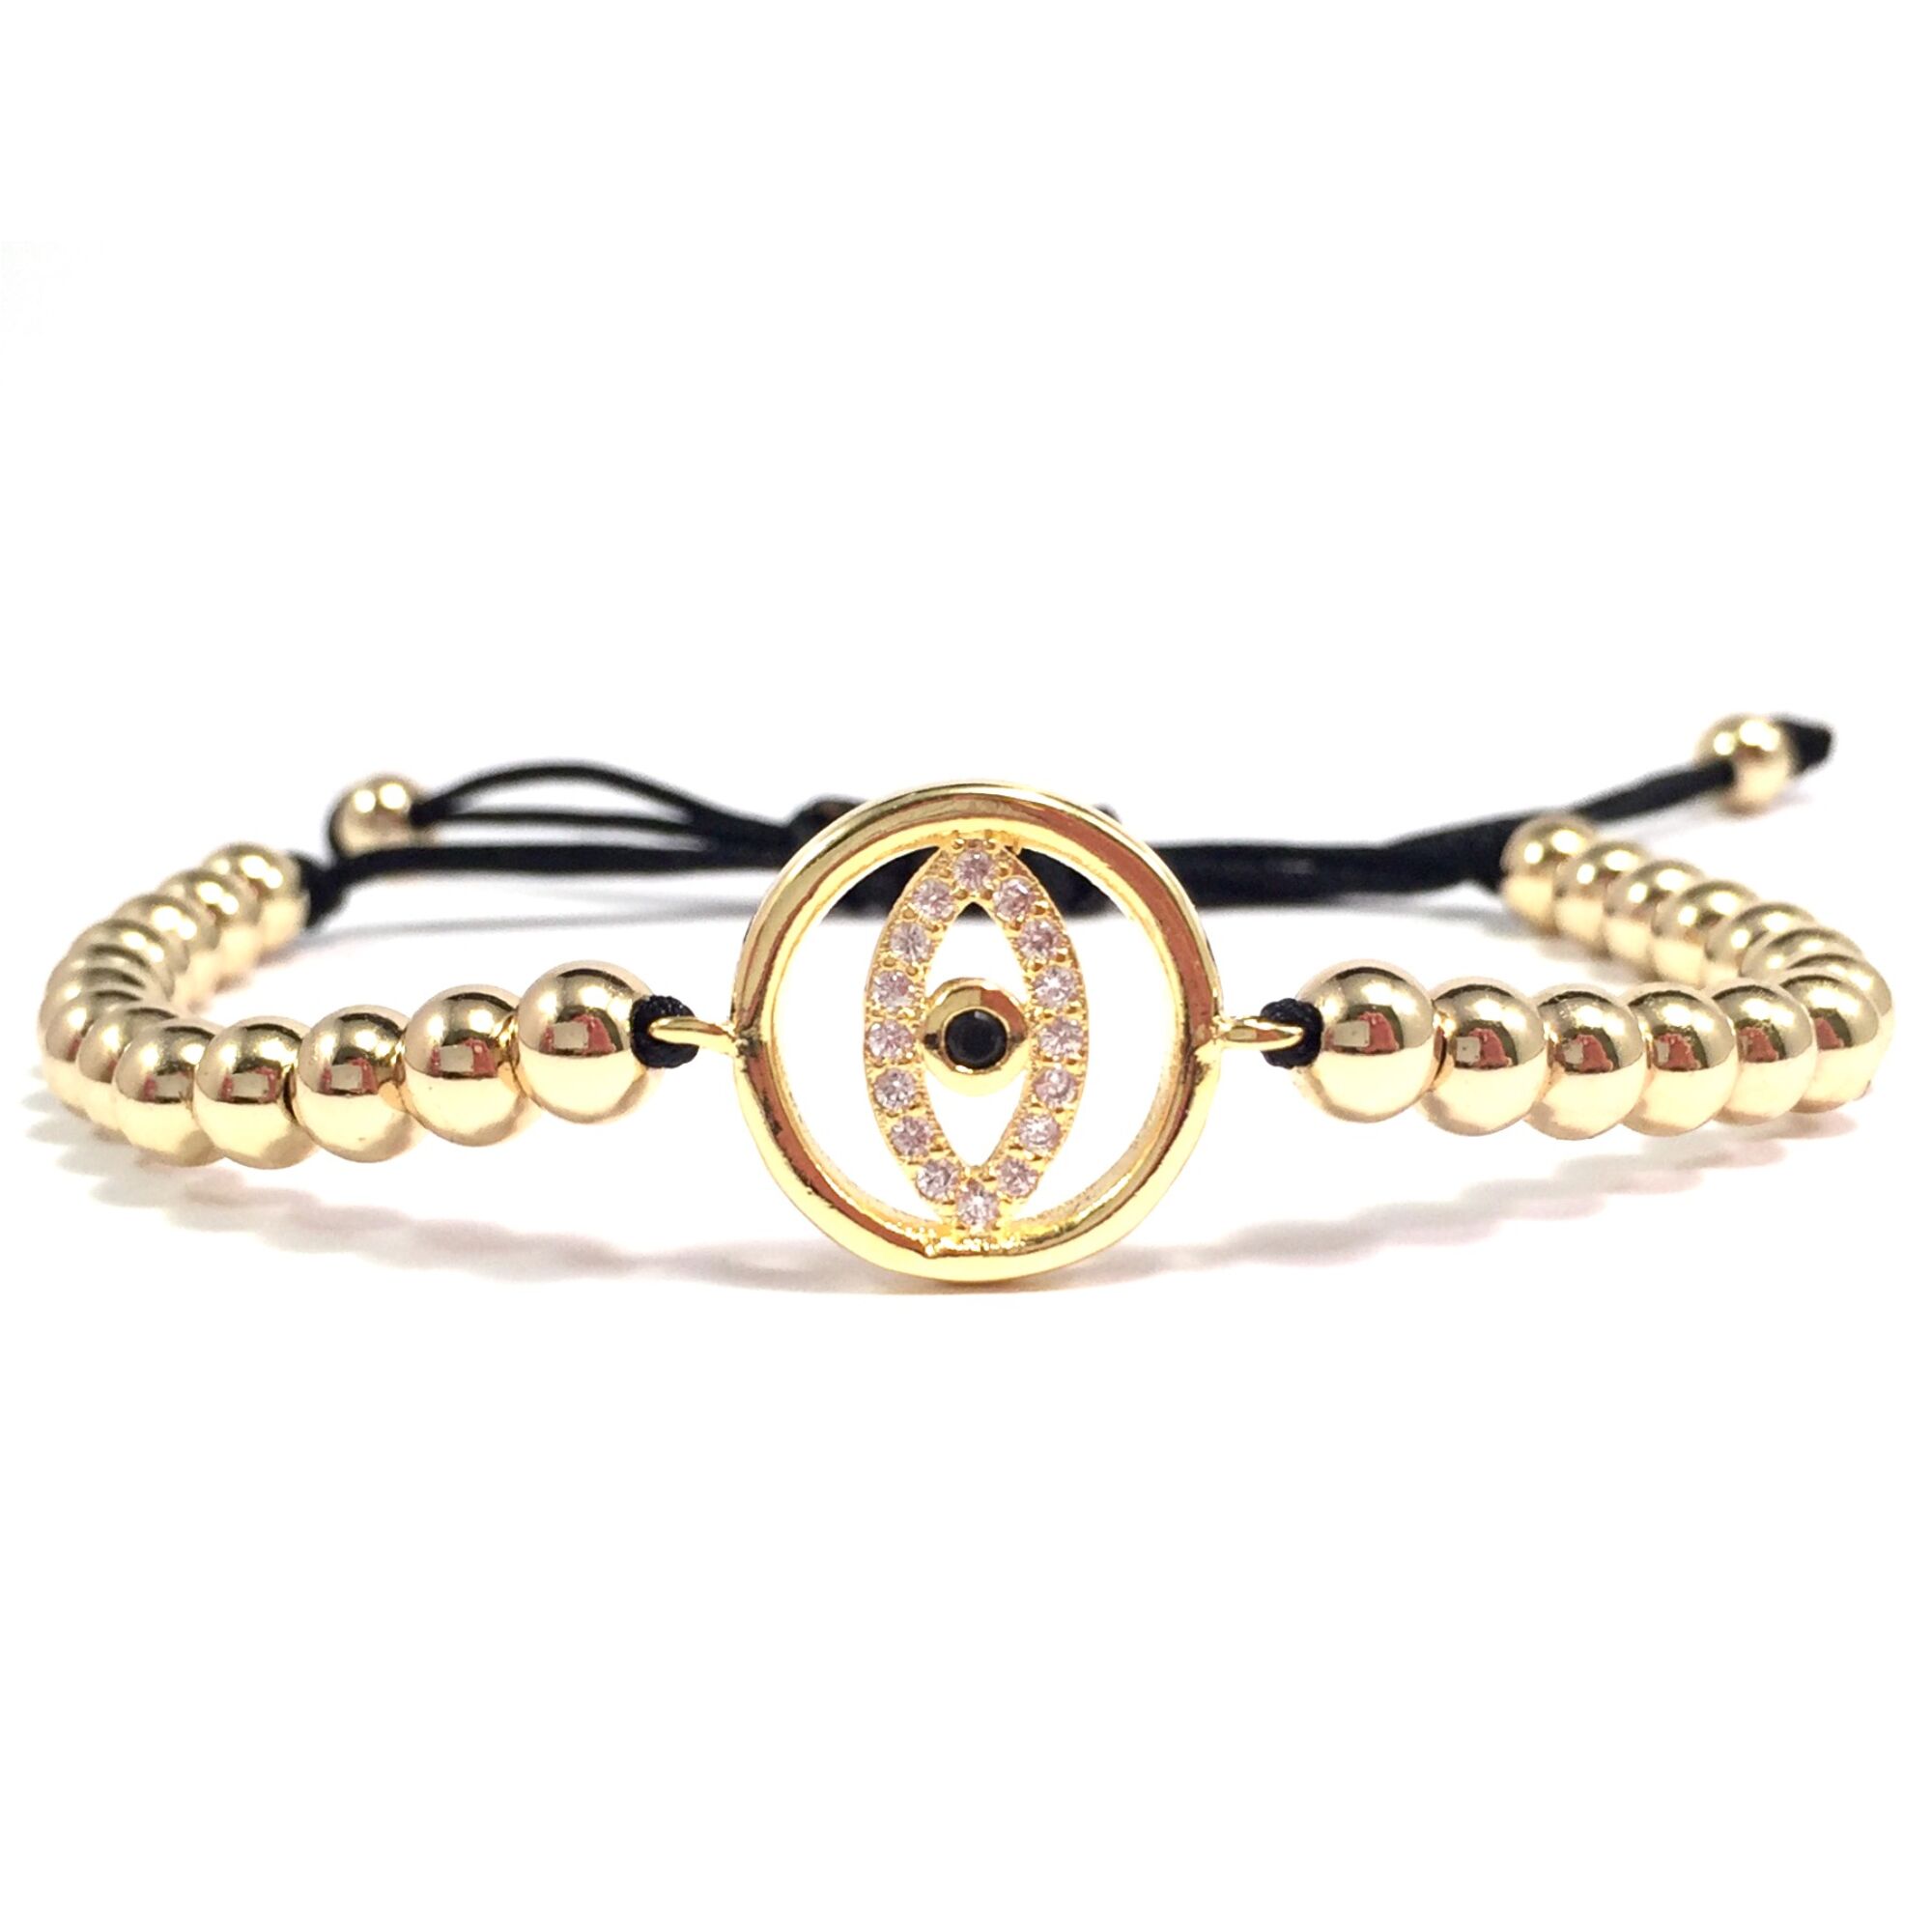 Luxury gold eye cord bracelet 3